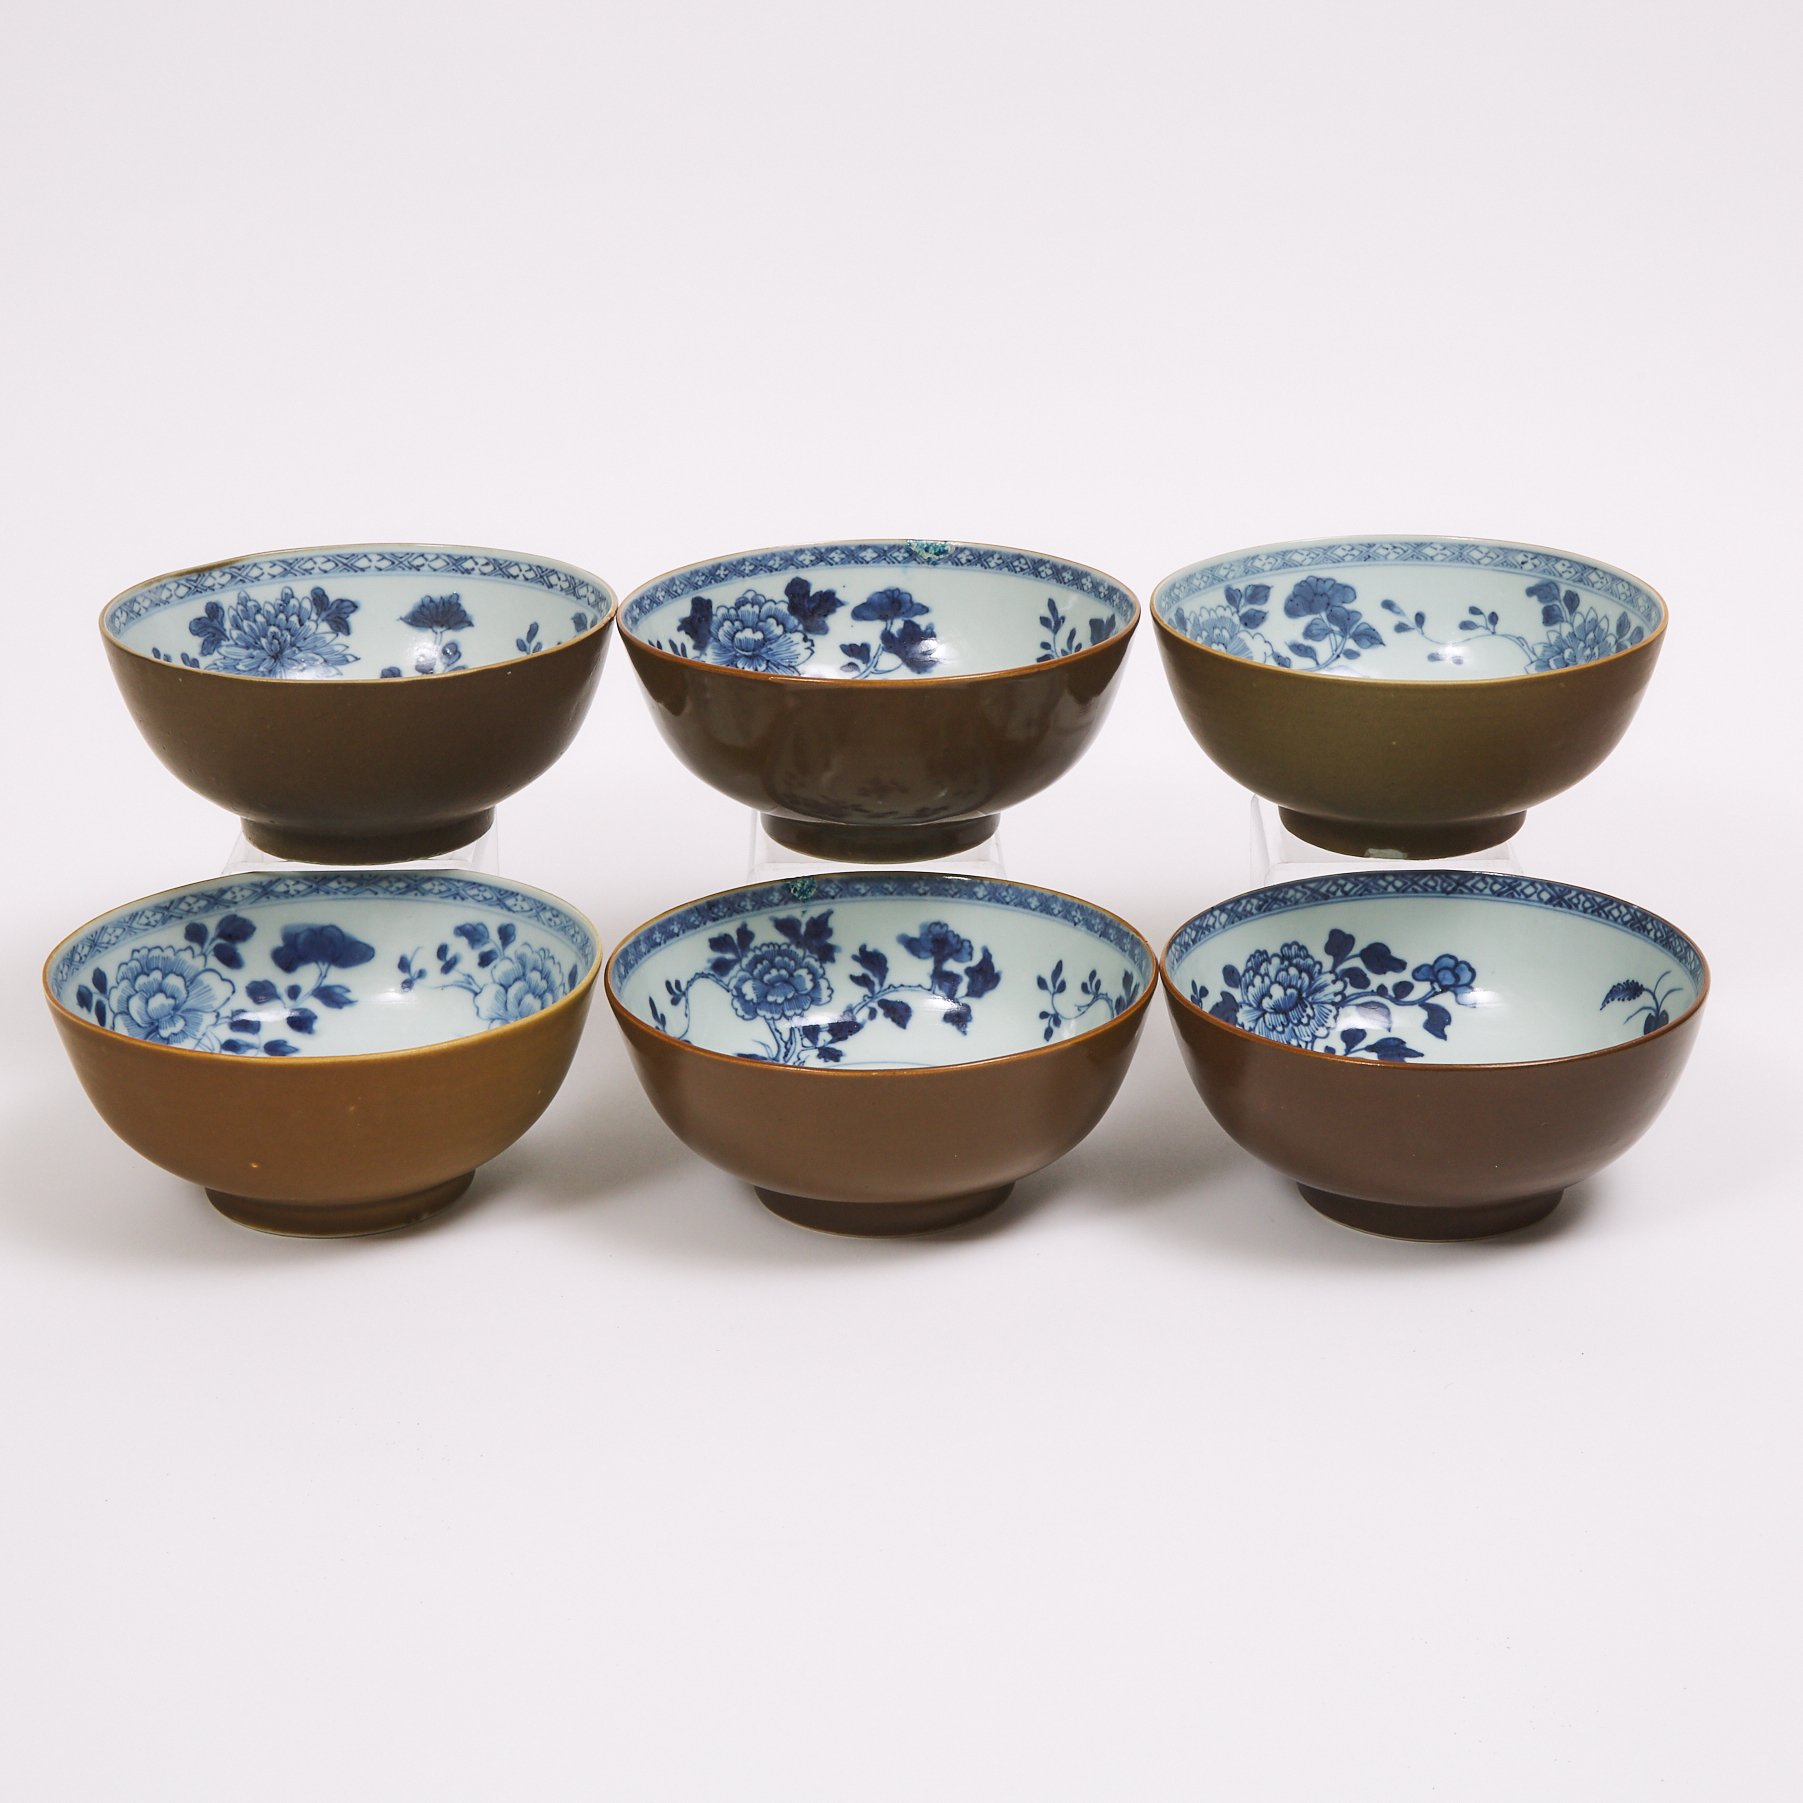 A Set of Six 'Batavian' Floral Bowls from the Nanking Cargo, Qianlong Period, Circa 1750